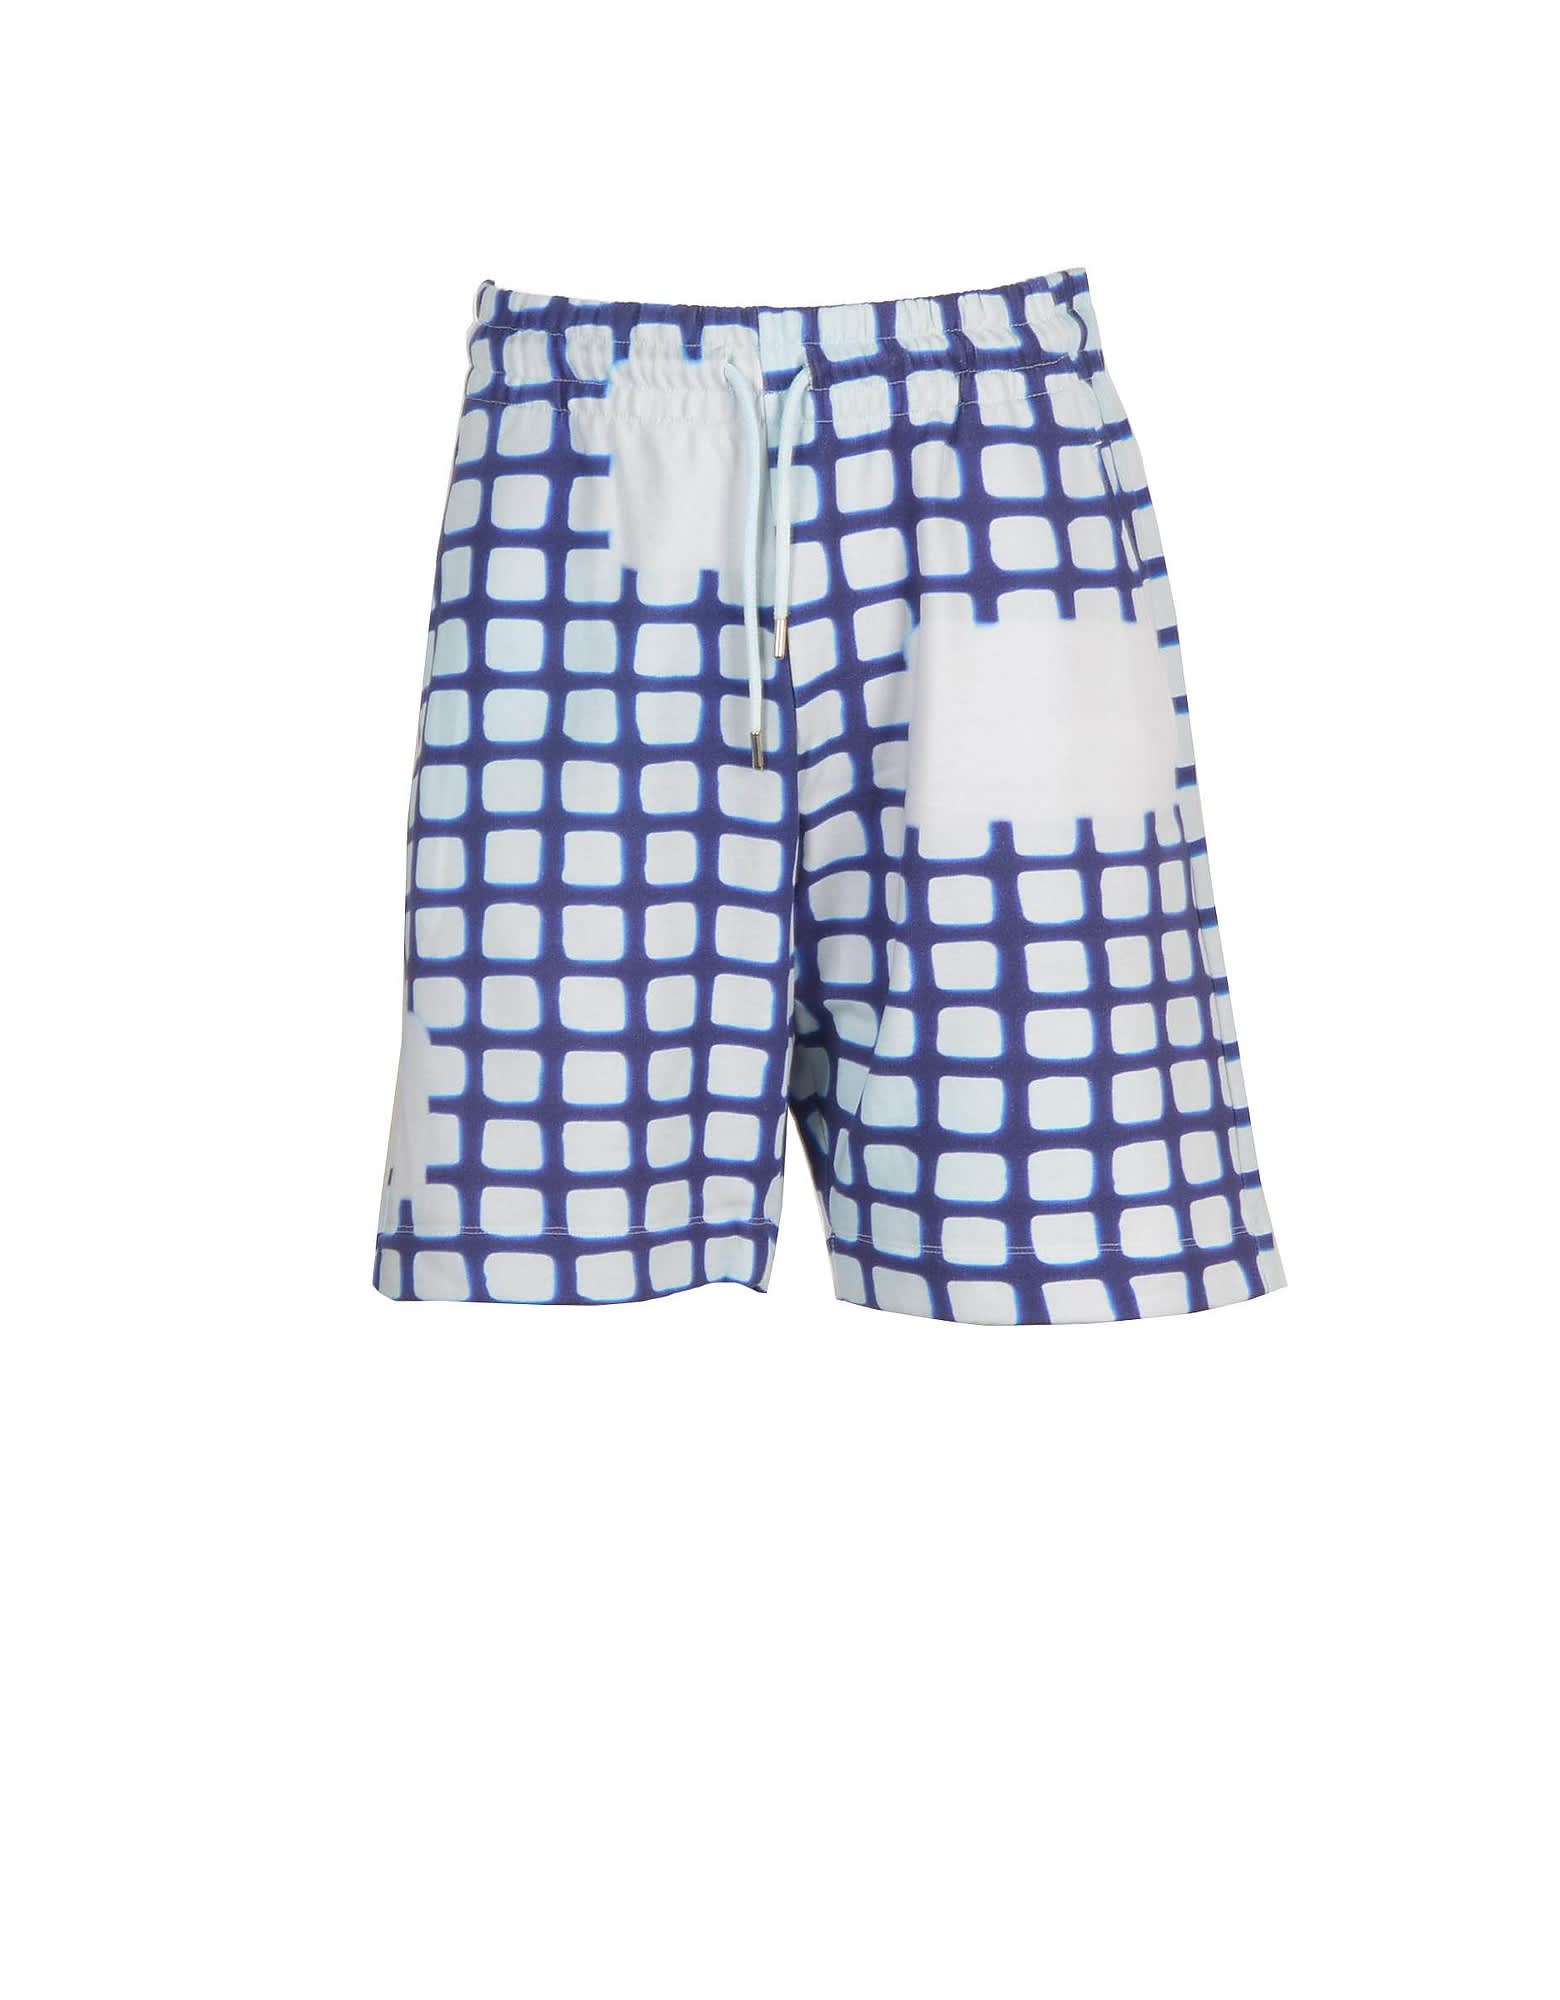 Dries Van Noten Mens Blue / Gray Bermuda Shorts